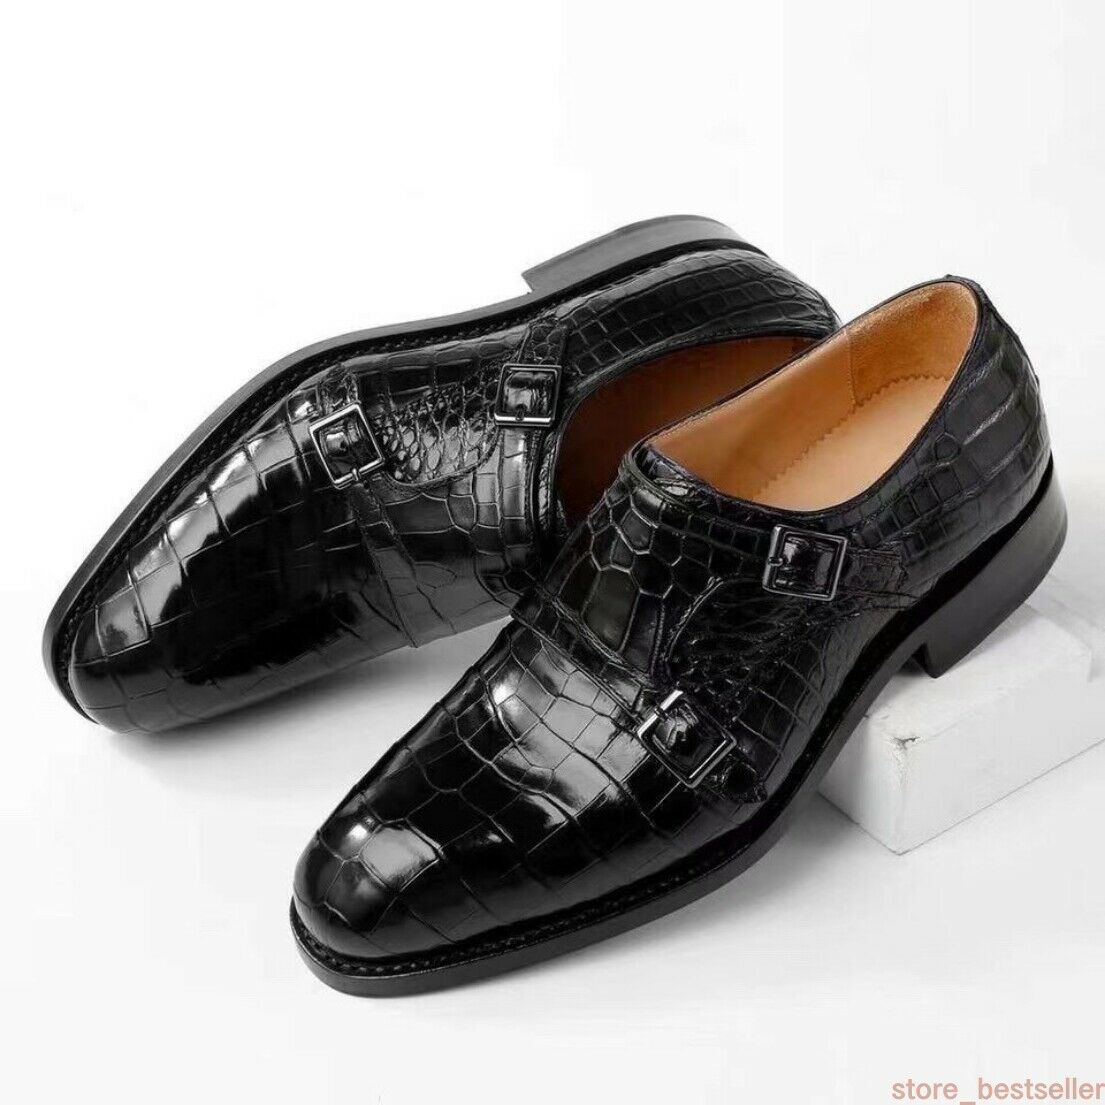 Crocodile Alligator Leather Double Monk Strap Dress Shoes Oxford Formal Business Shoes-Black